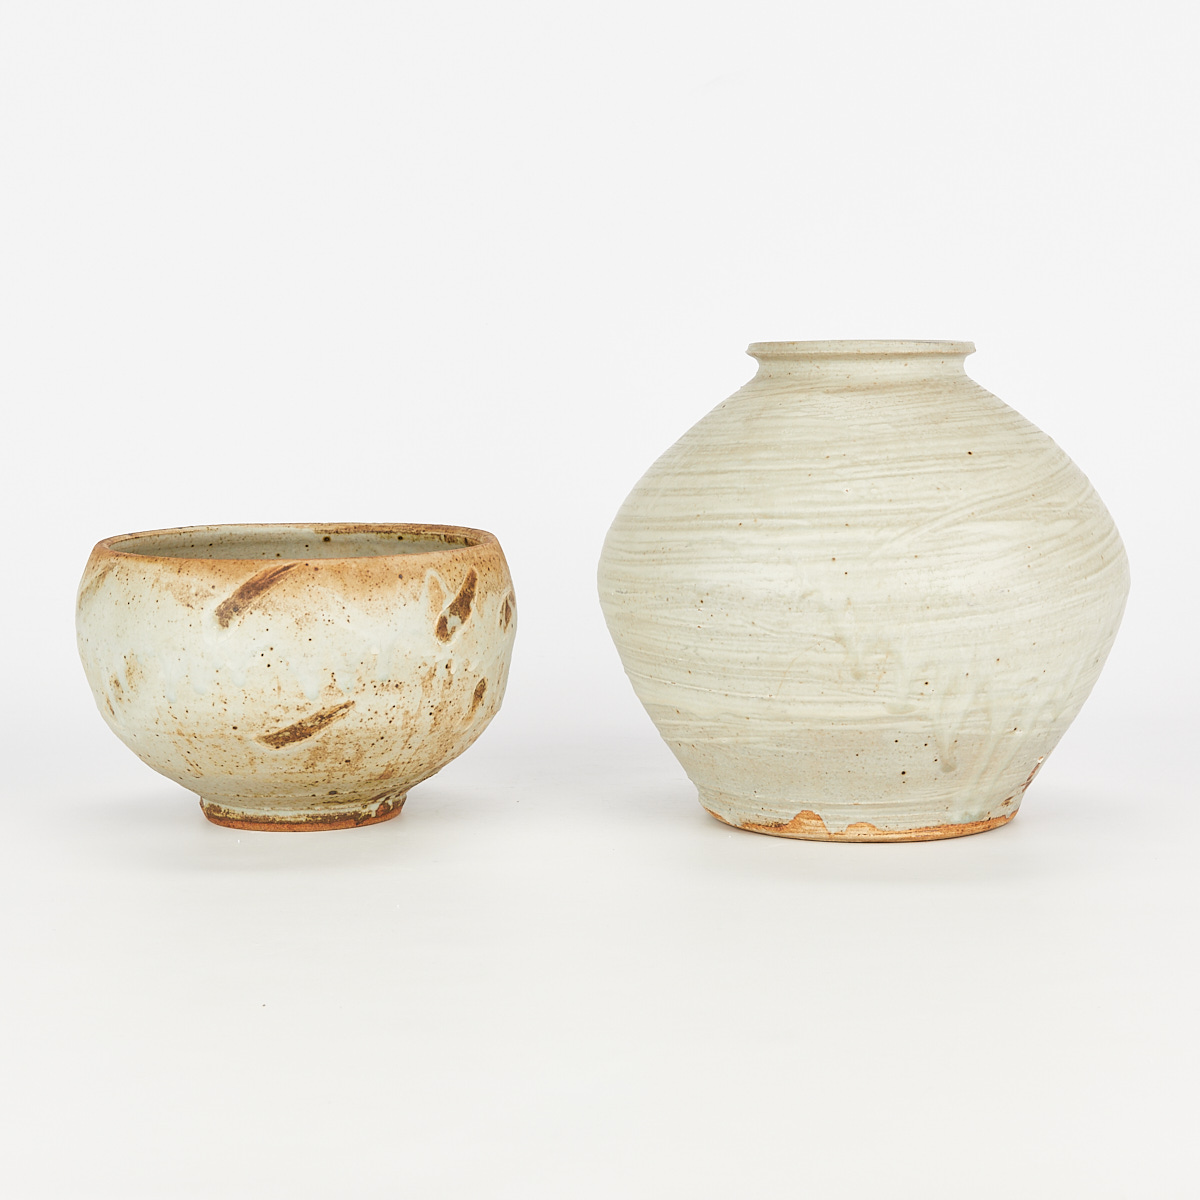 2 Studio Ceramic Vessels - Wayne Branum - Image 5 of 10